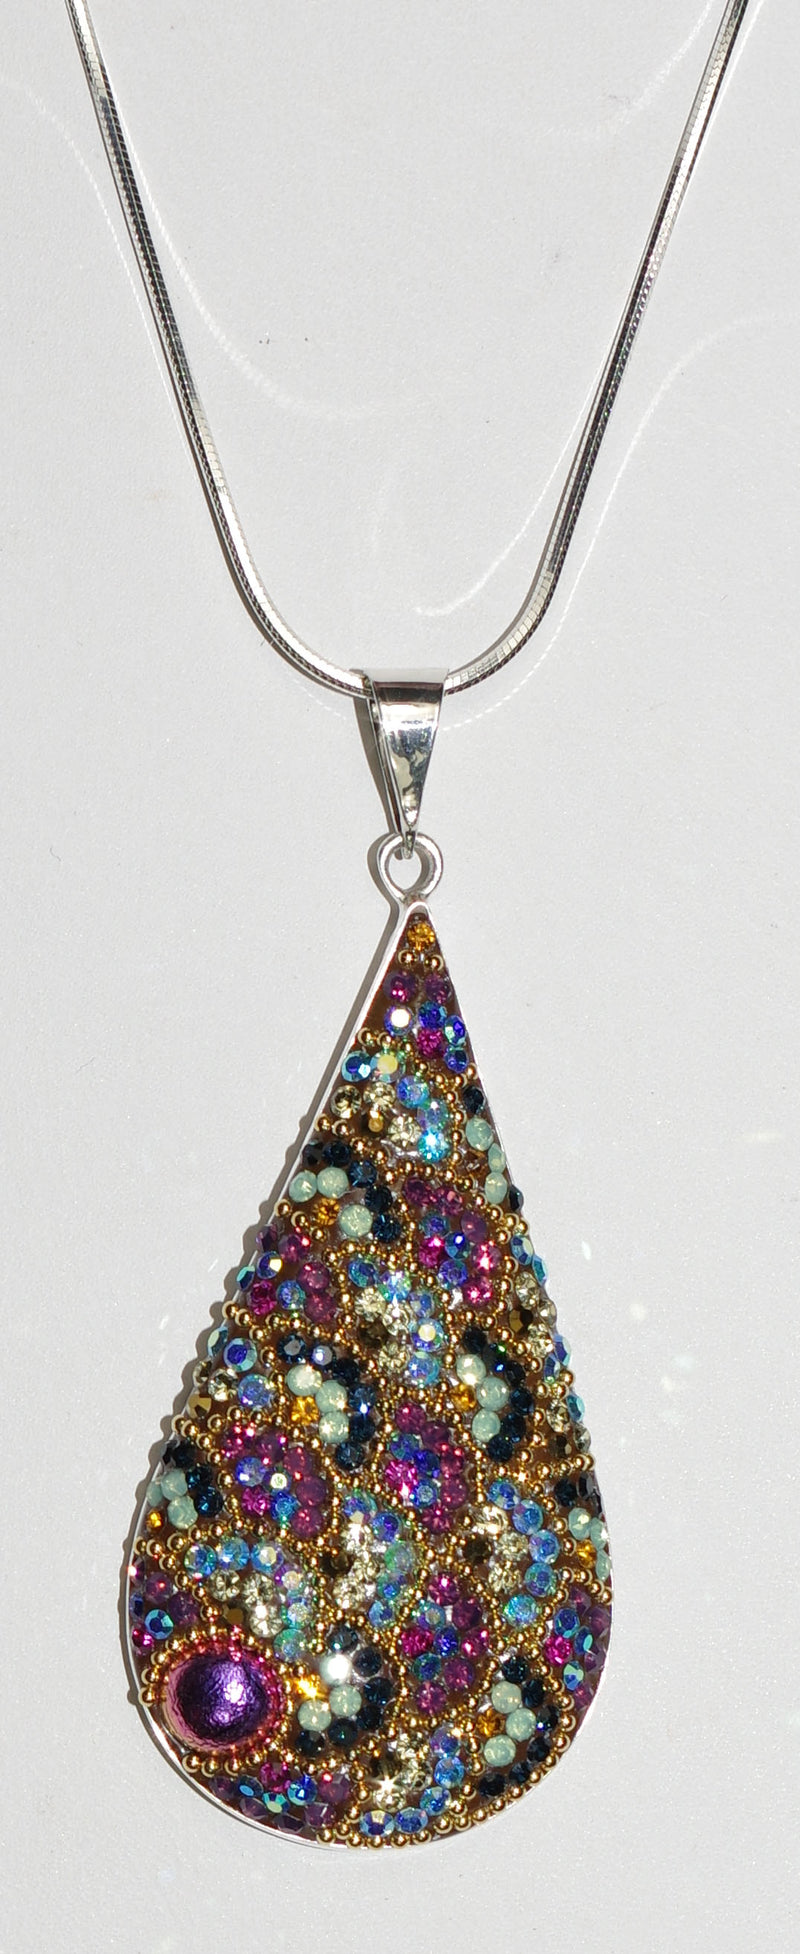 MOSAICO PENDANT PP-8559-K: multi color Austrian crystals in 1.75" solid silver pendant, 18-20 inch adjustable silver chain